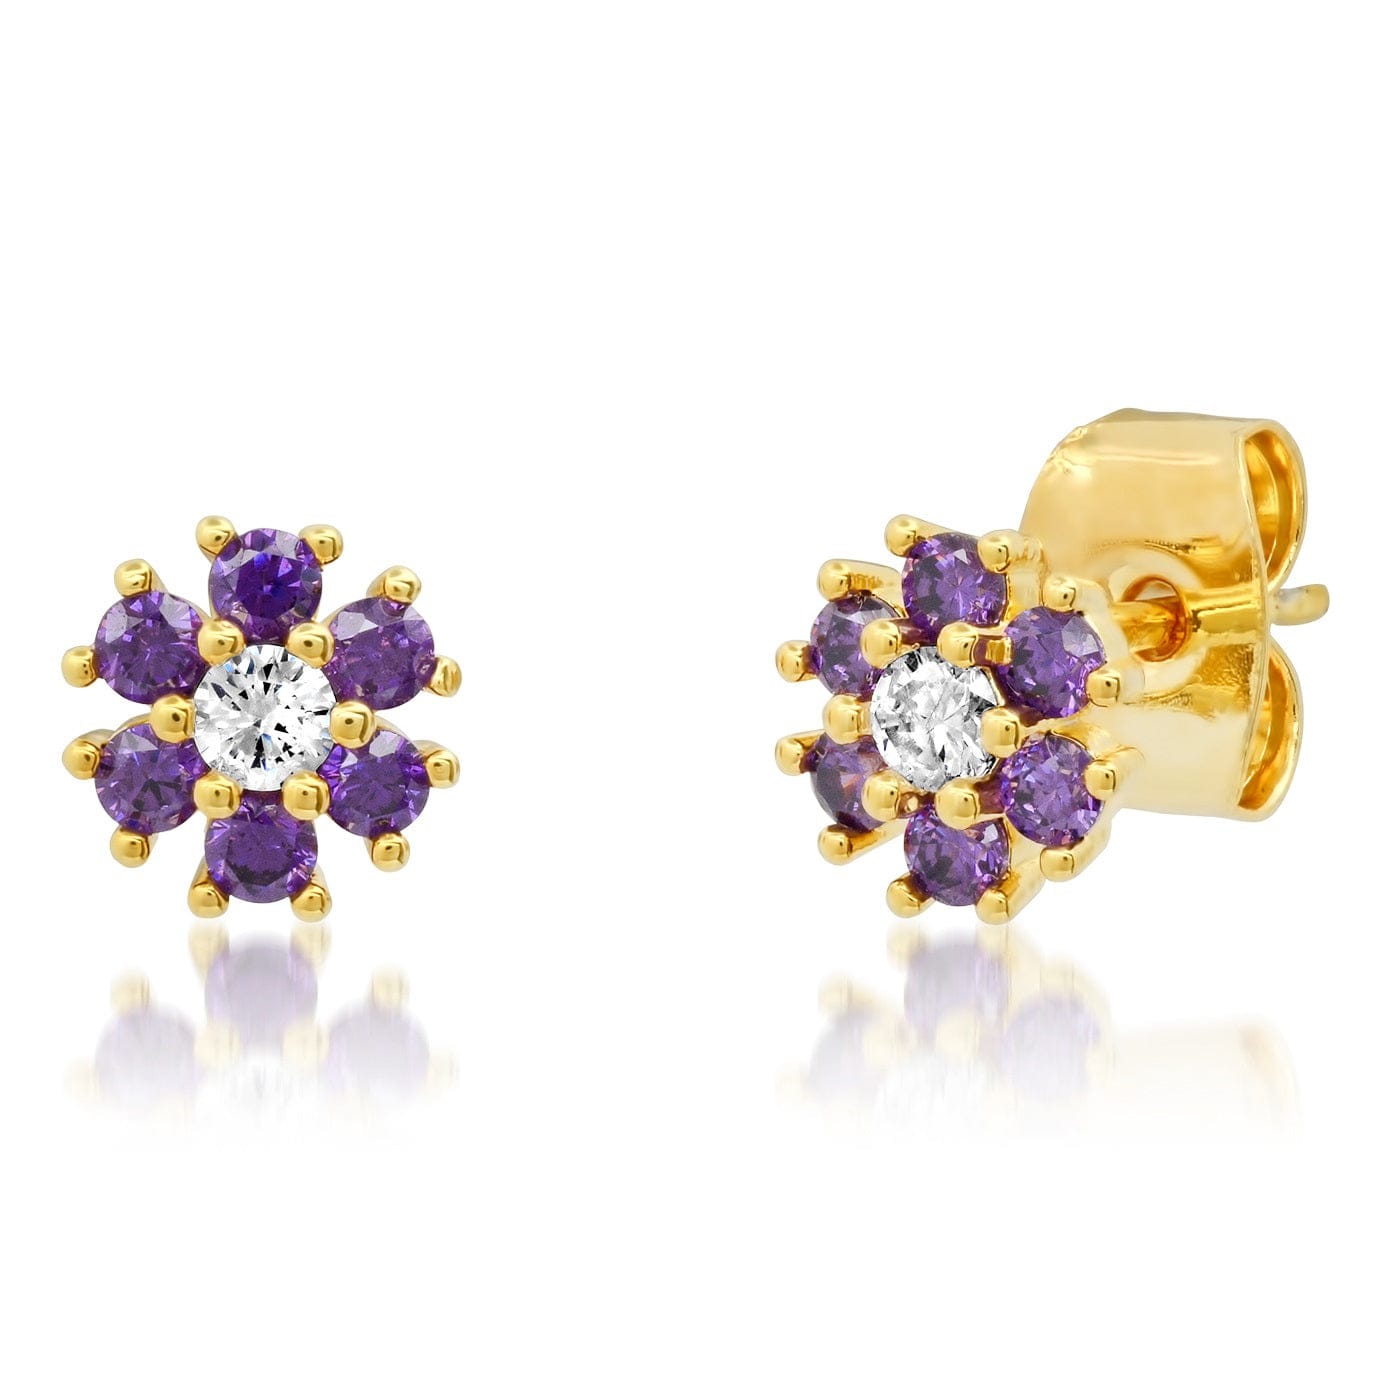 TAI JEWELRY Earrings Purple CZ Flower Stud With Jewel Tone Center Stone